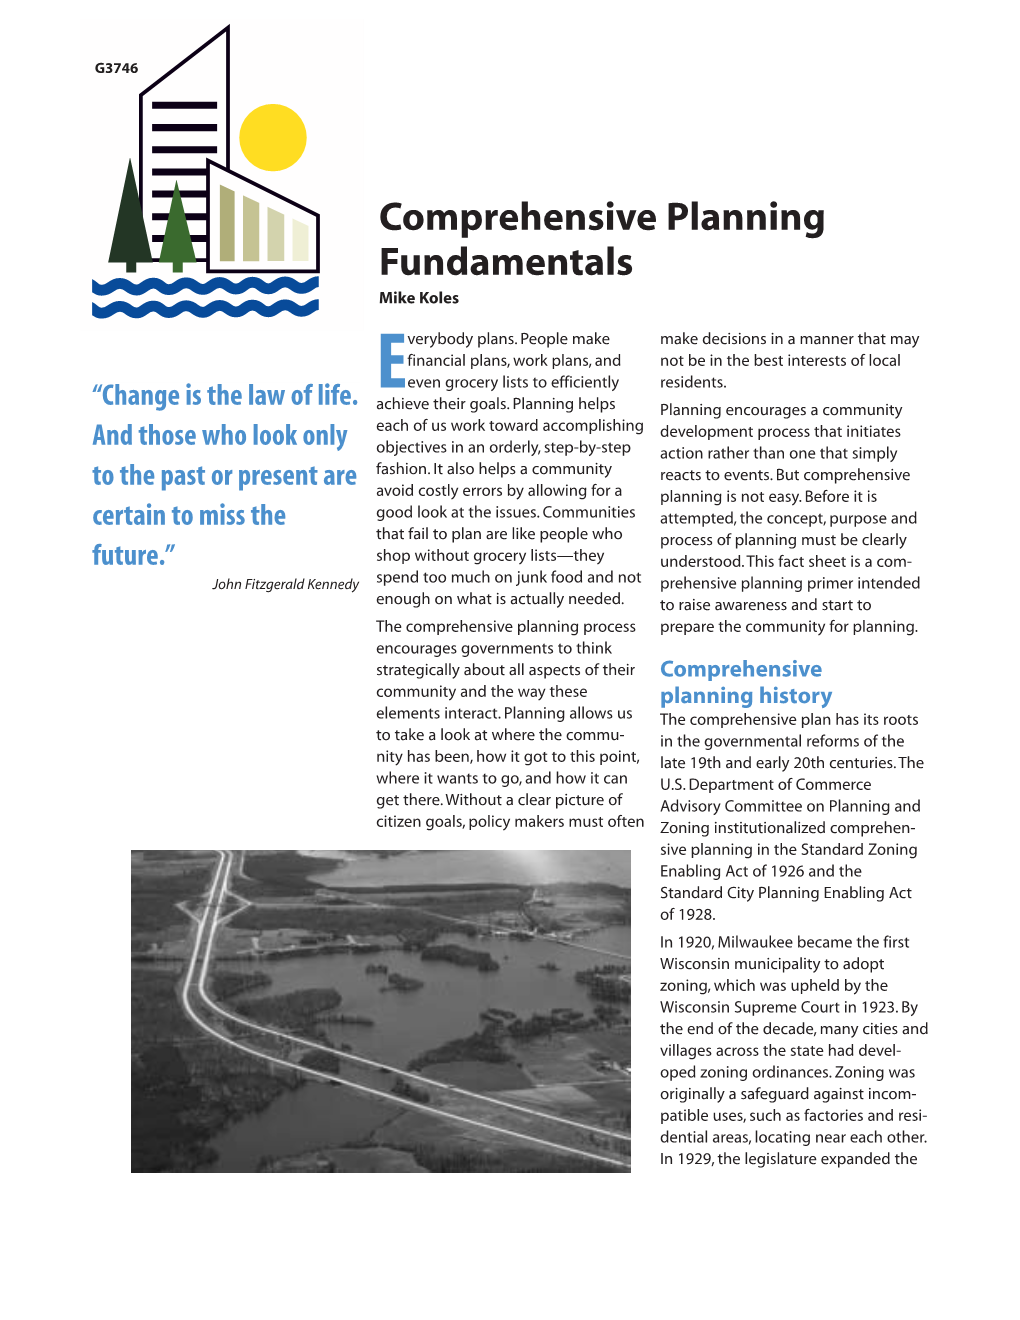 Comprehensive Planning Fundamentals Mike Koles